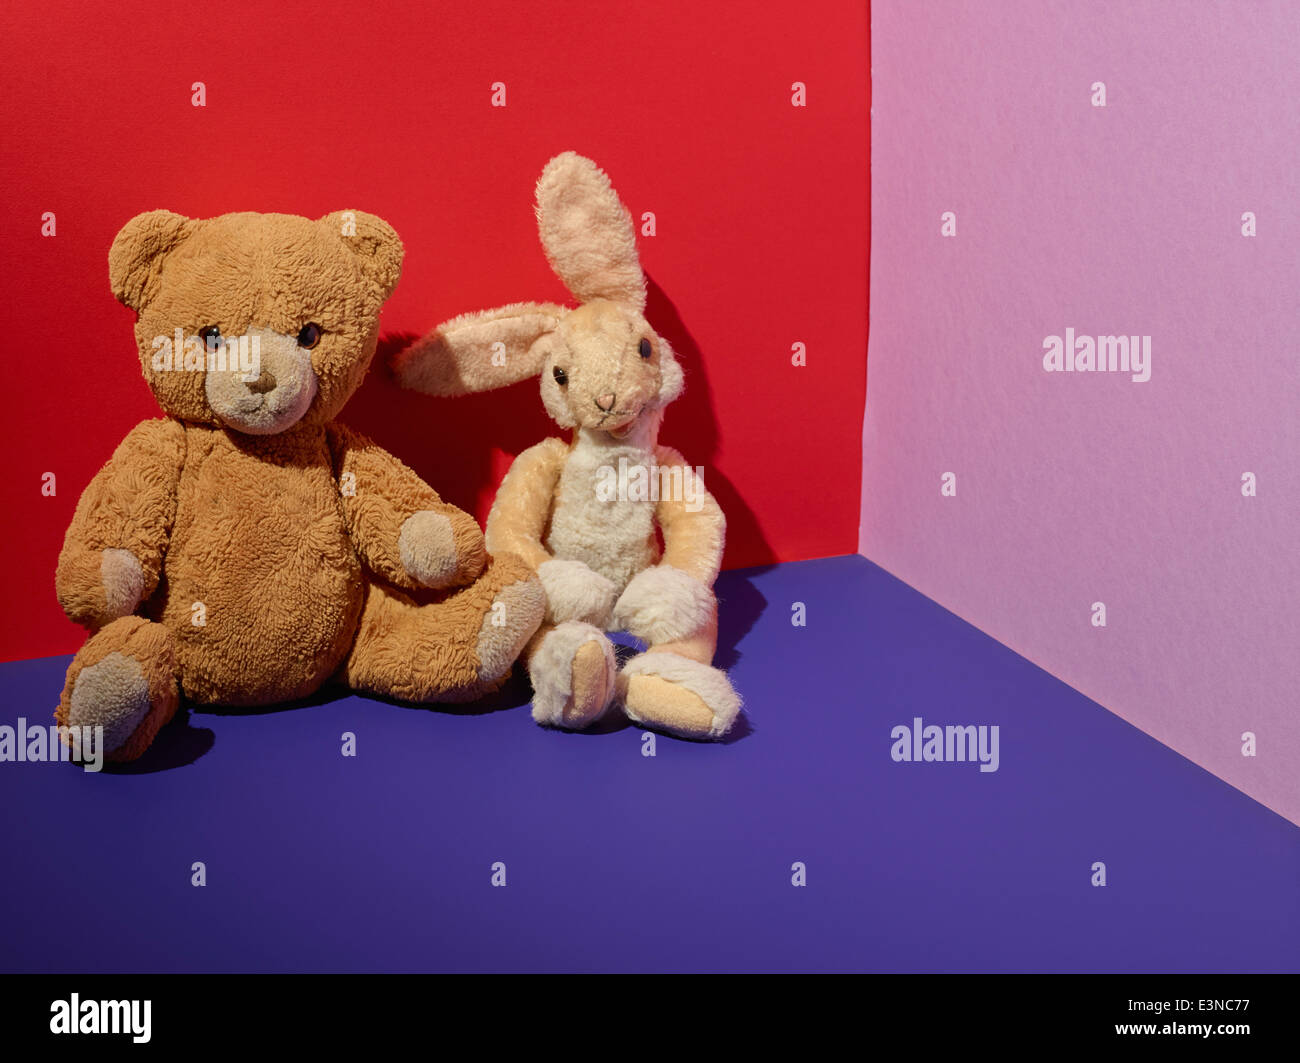 Teddy bears on floor in colorful room Stock Photo